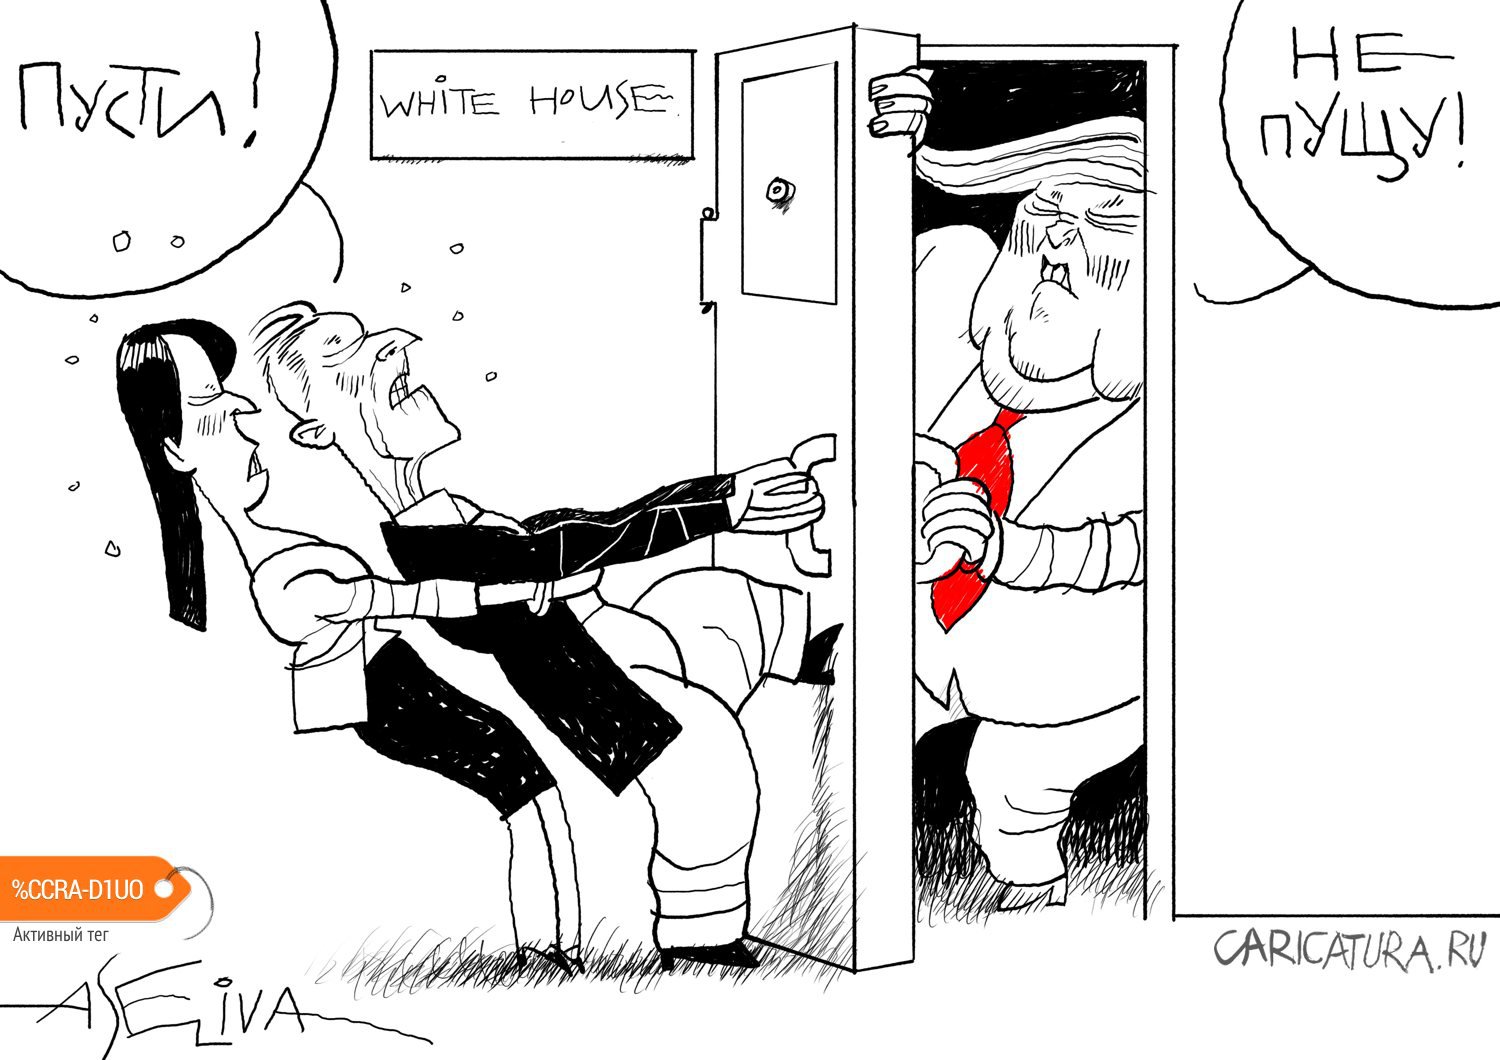 Карикатура "Кто кого?", Андрей Селиванов